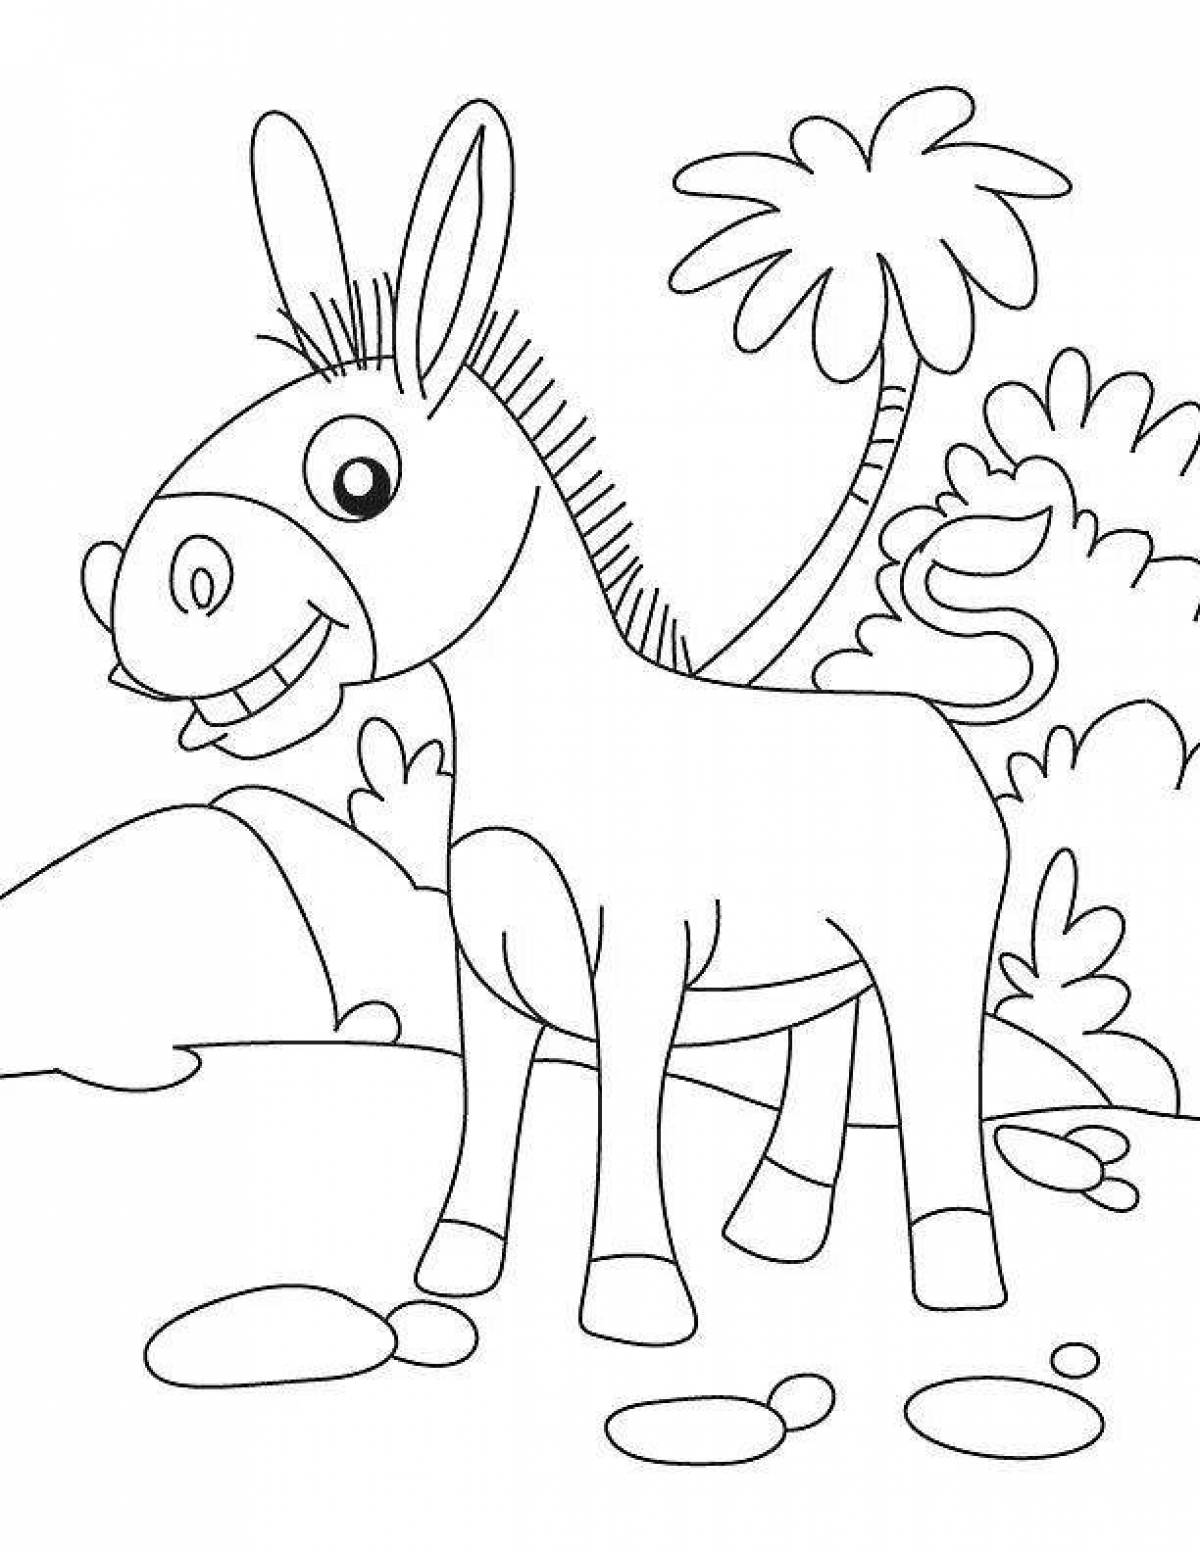 Happy coloring page ослик для детей